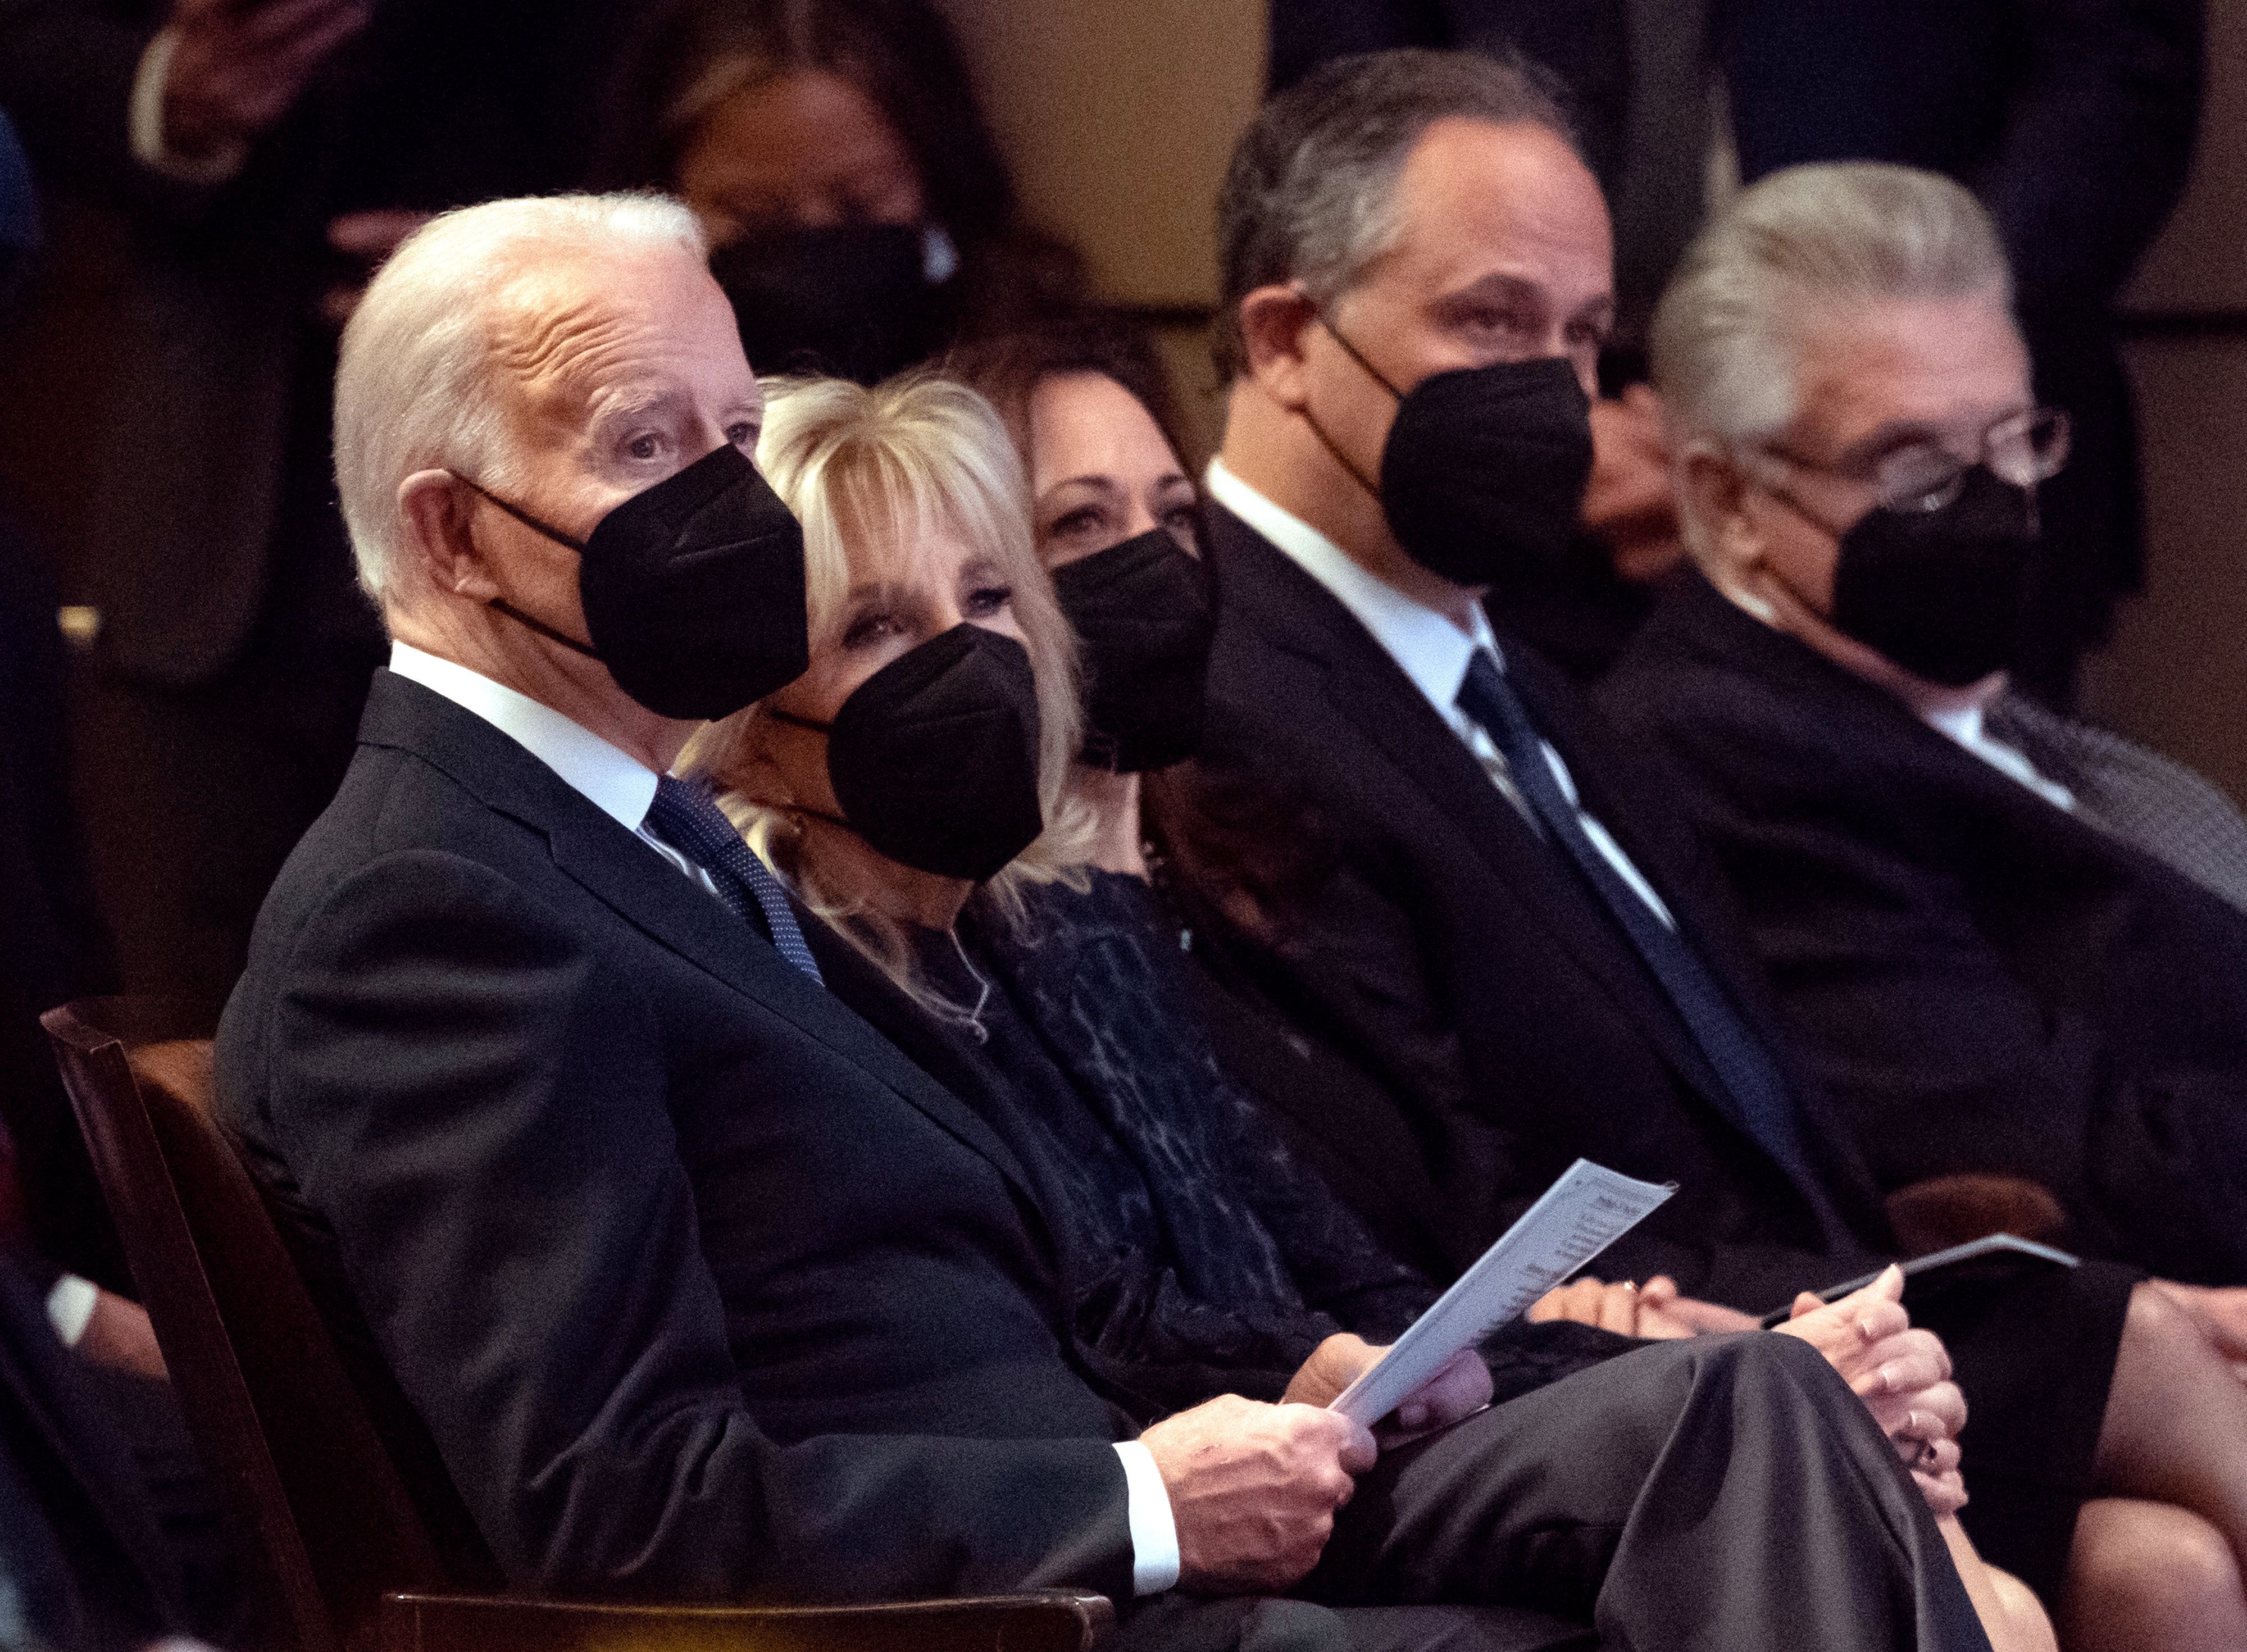 US President Joe Biden, First Lady Jill Biden, Vice President Kamala Harris and Second Gentleman Doug Emhoff attend a memorial service for US Senate Majority Leader Harry Reid.